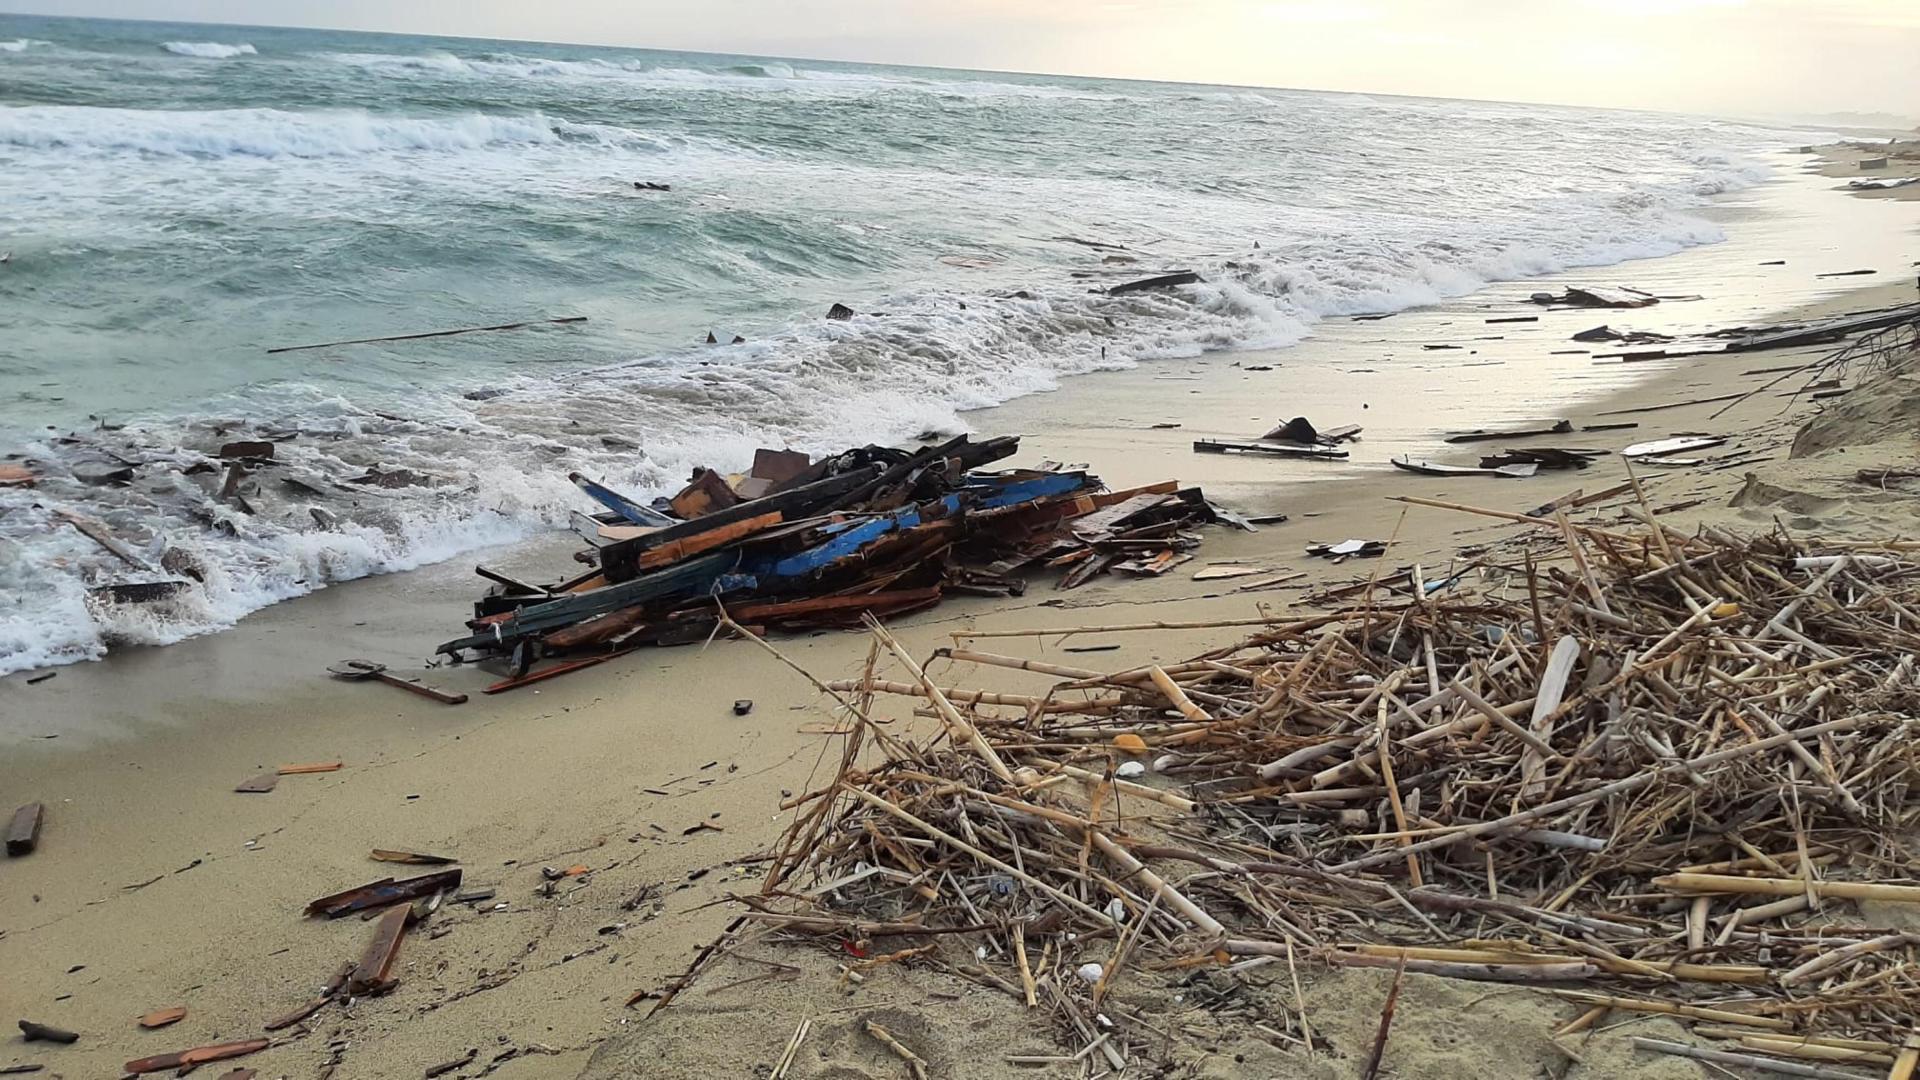 Debris wash ashore following a shipwreck, at a beach near Cutro, Crotone province, southern Italy, 26 February 2023. EFE/EPA/ANSA